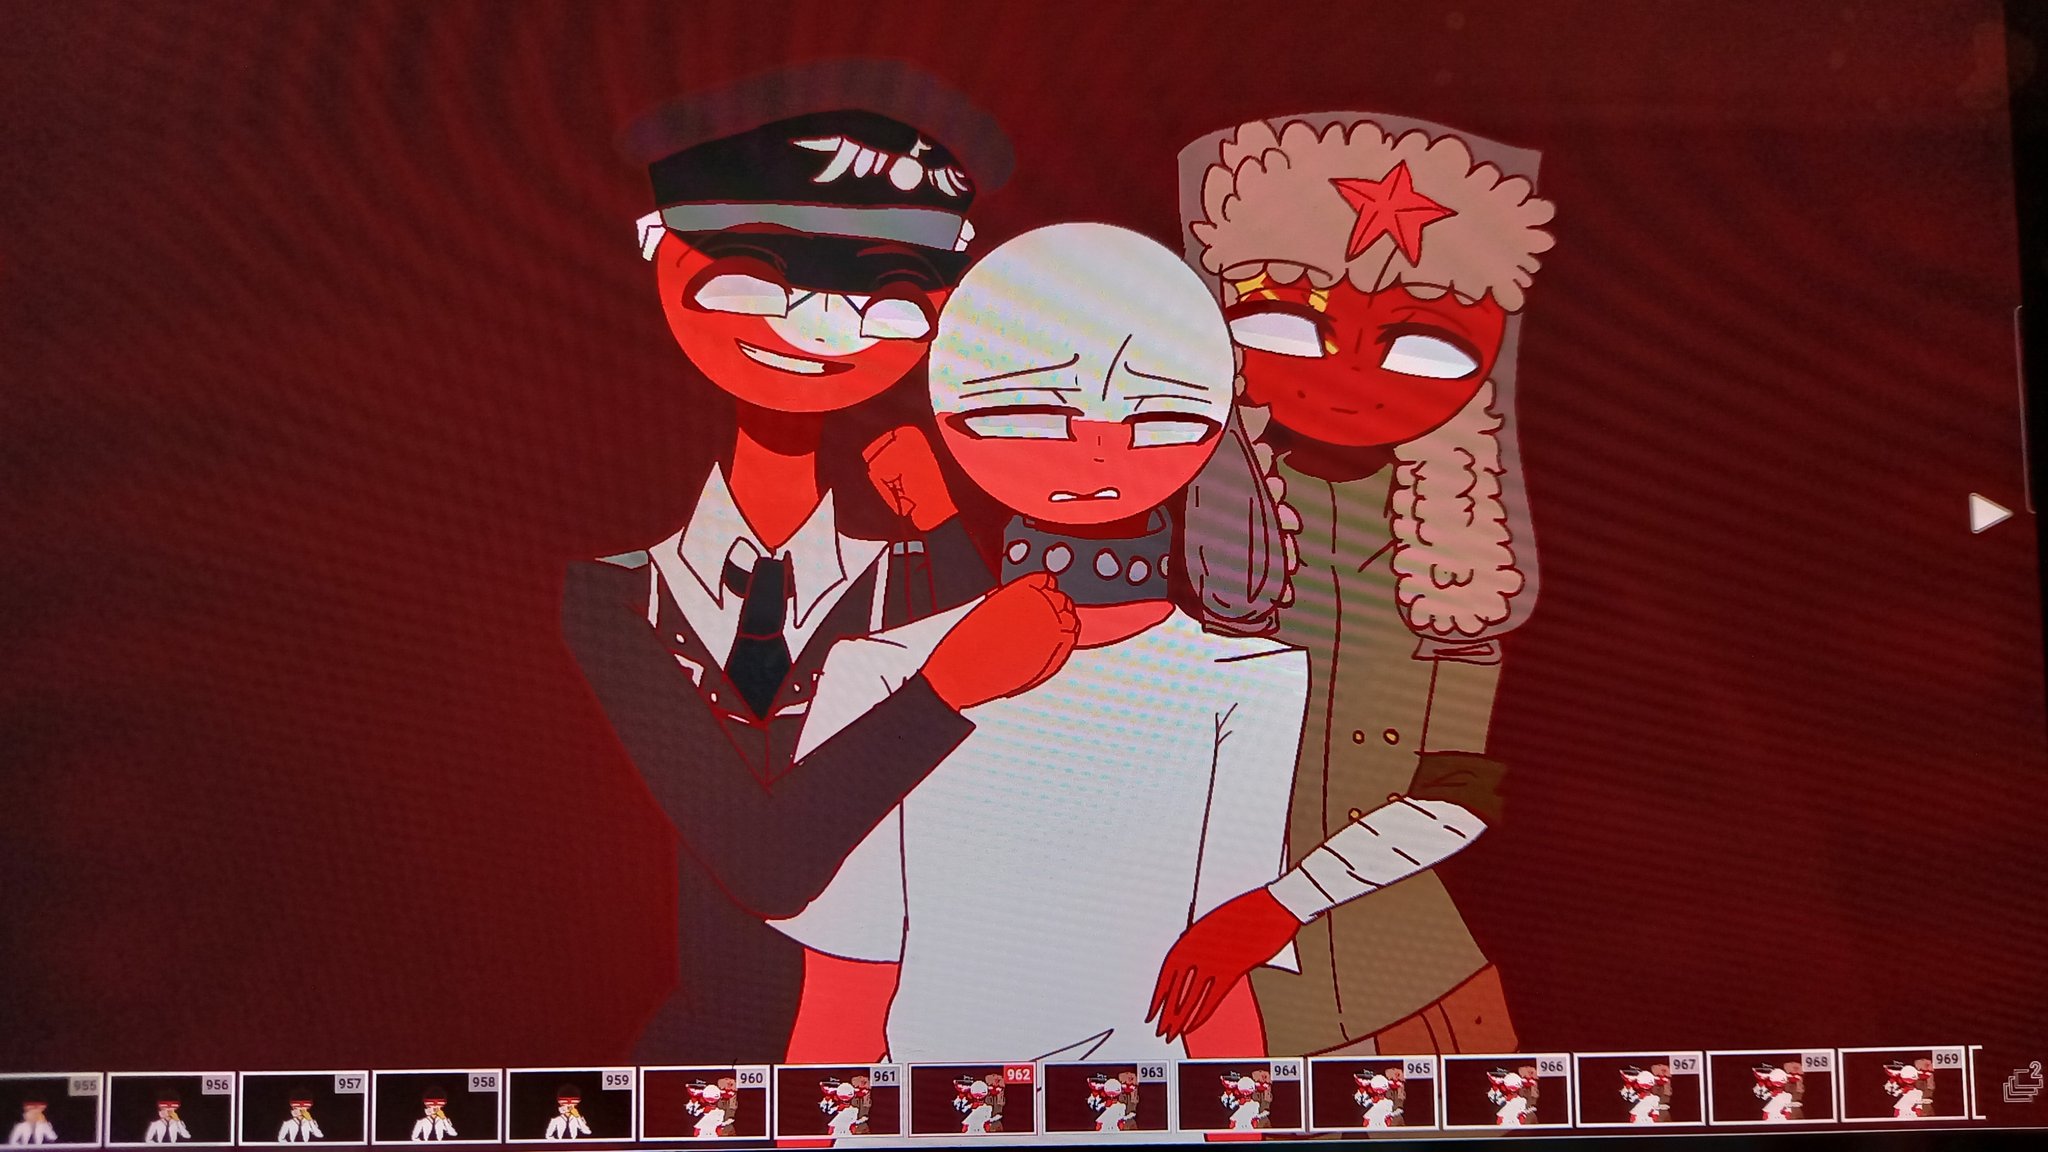 COUNTRYHUMANS/USSR] Psycho animation meme 